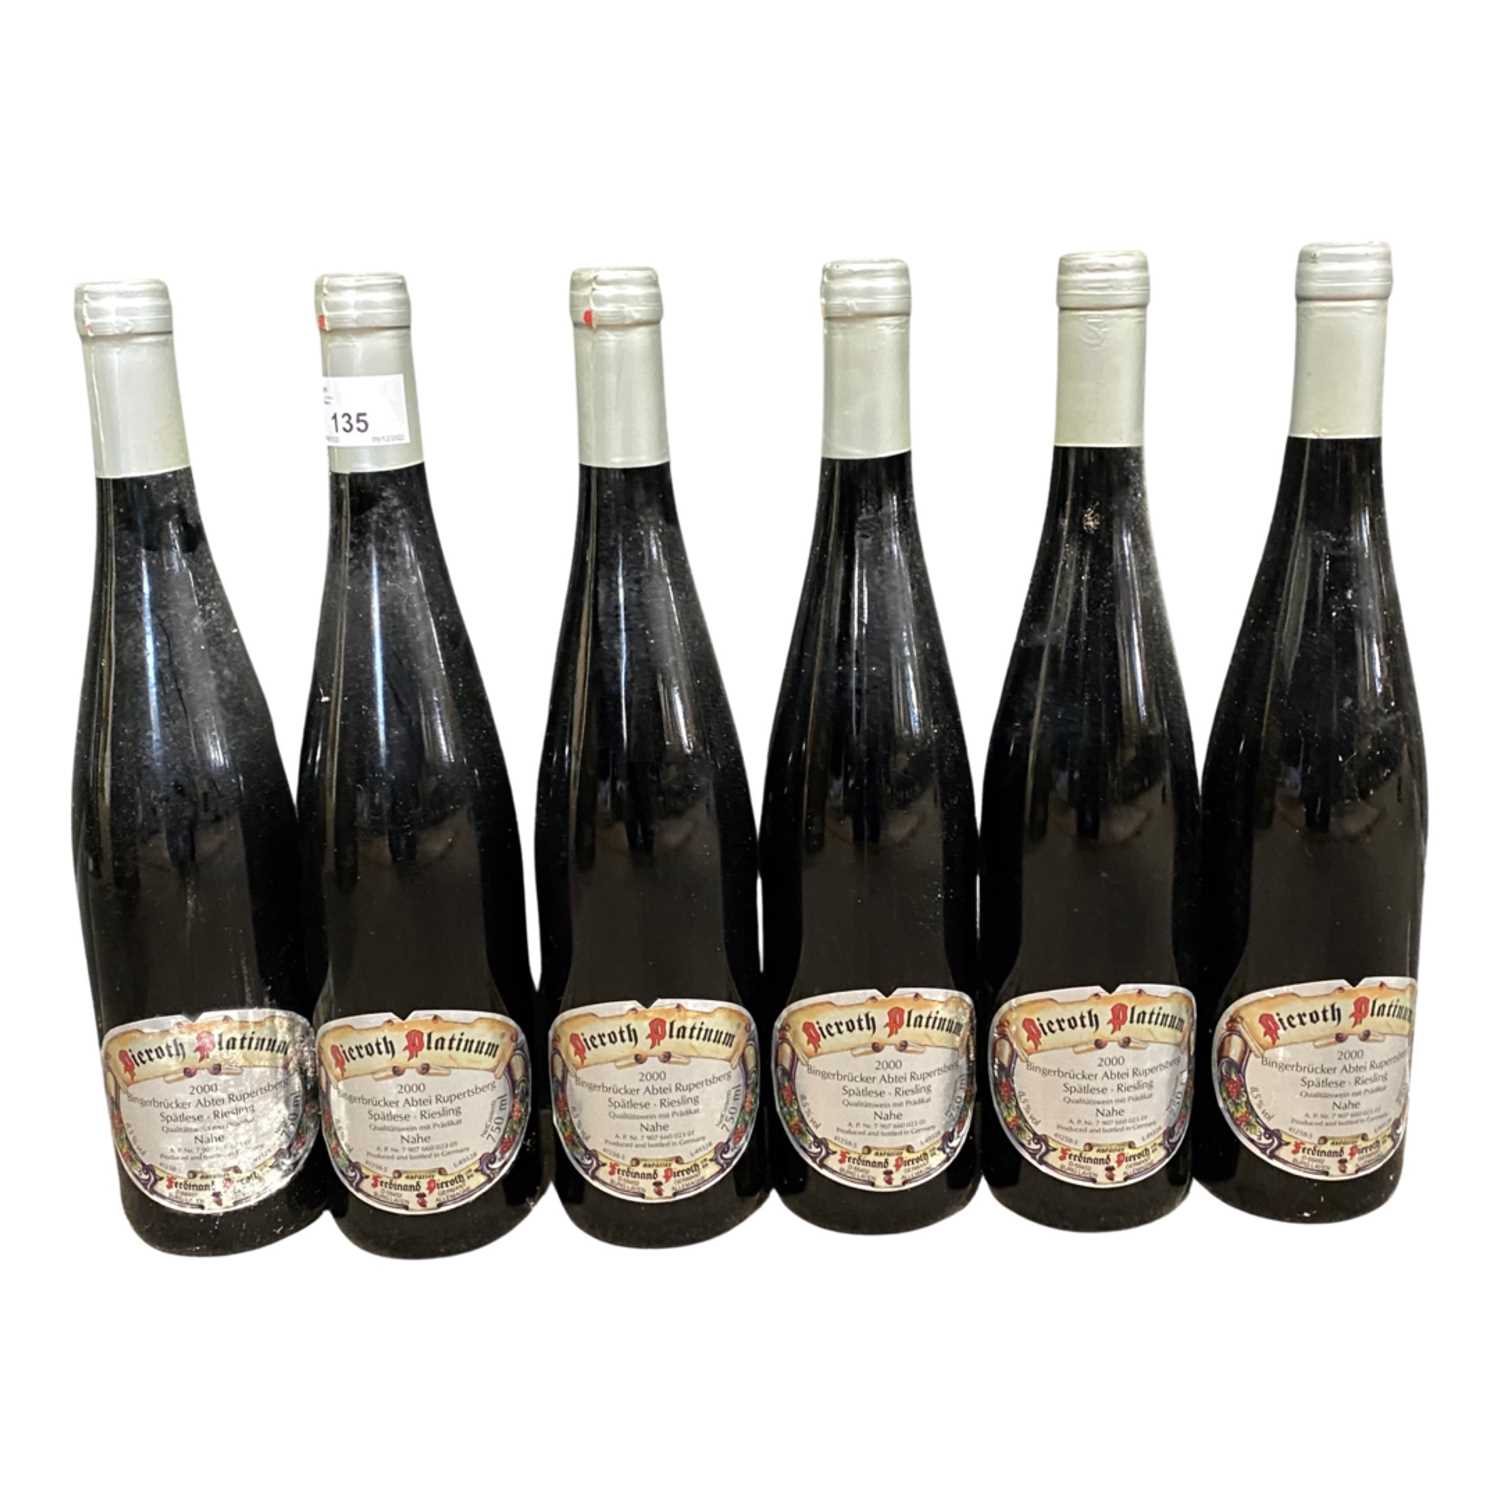 Six bottles of 2000 Bingerbrücker Abtei Rupertsberg Spätlese